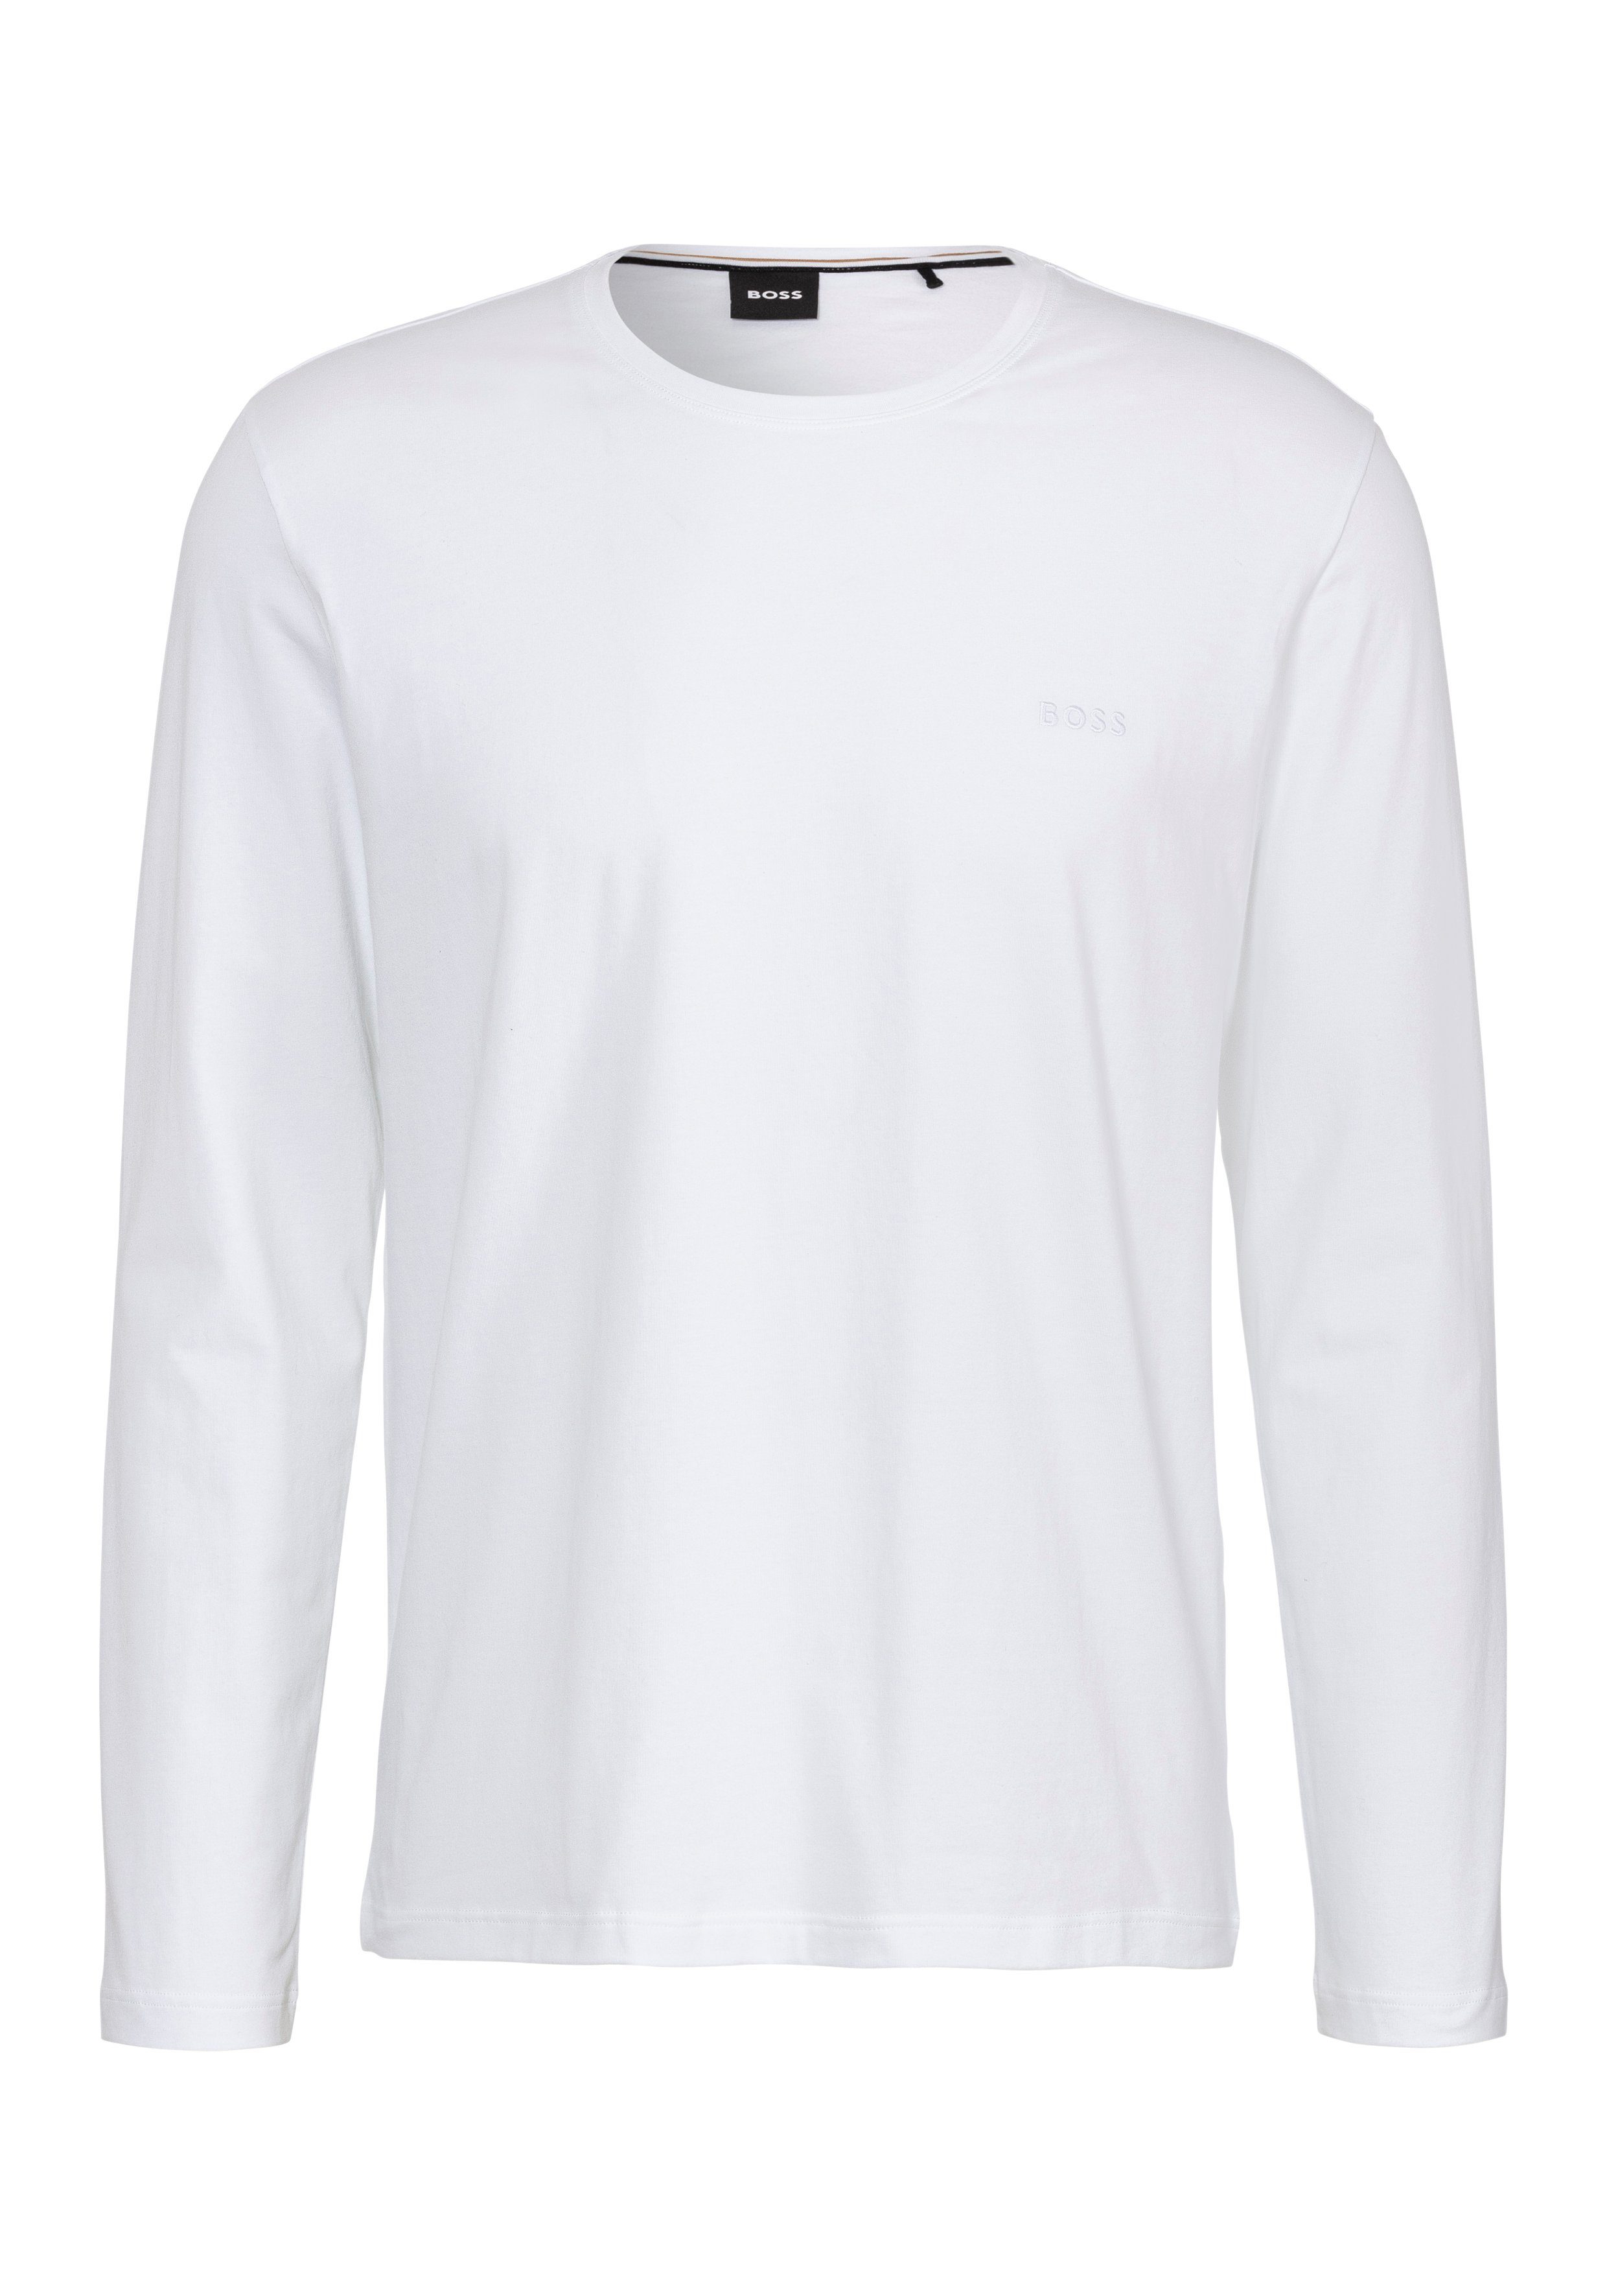 BOSS Langarmshirt R 100 Brust auf der White mit BOSS Stickerei Mix&Match LS-Shirt